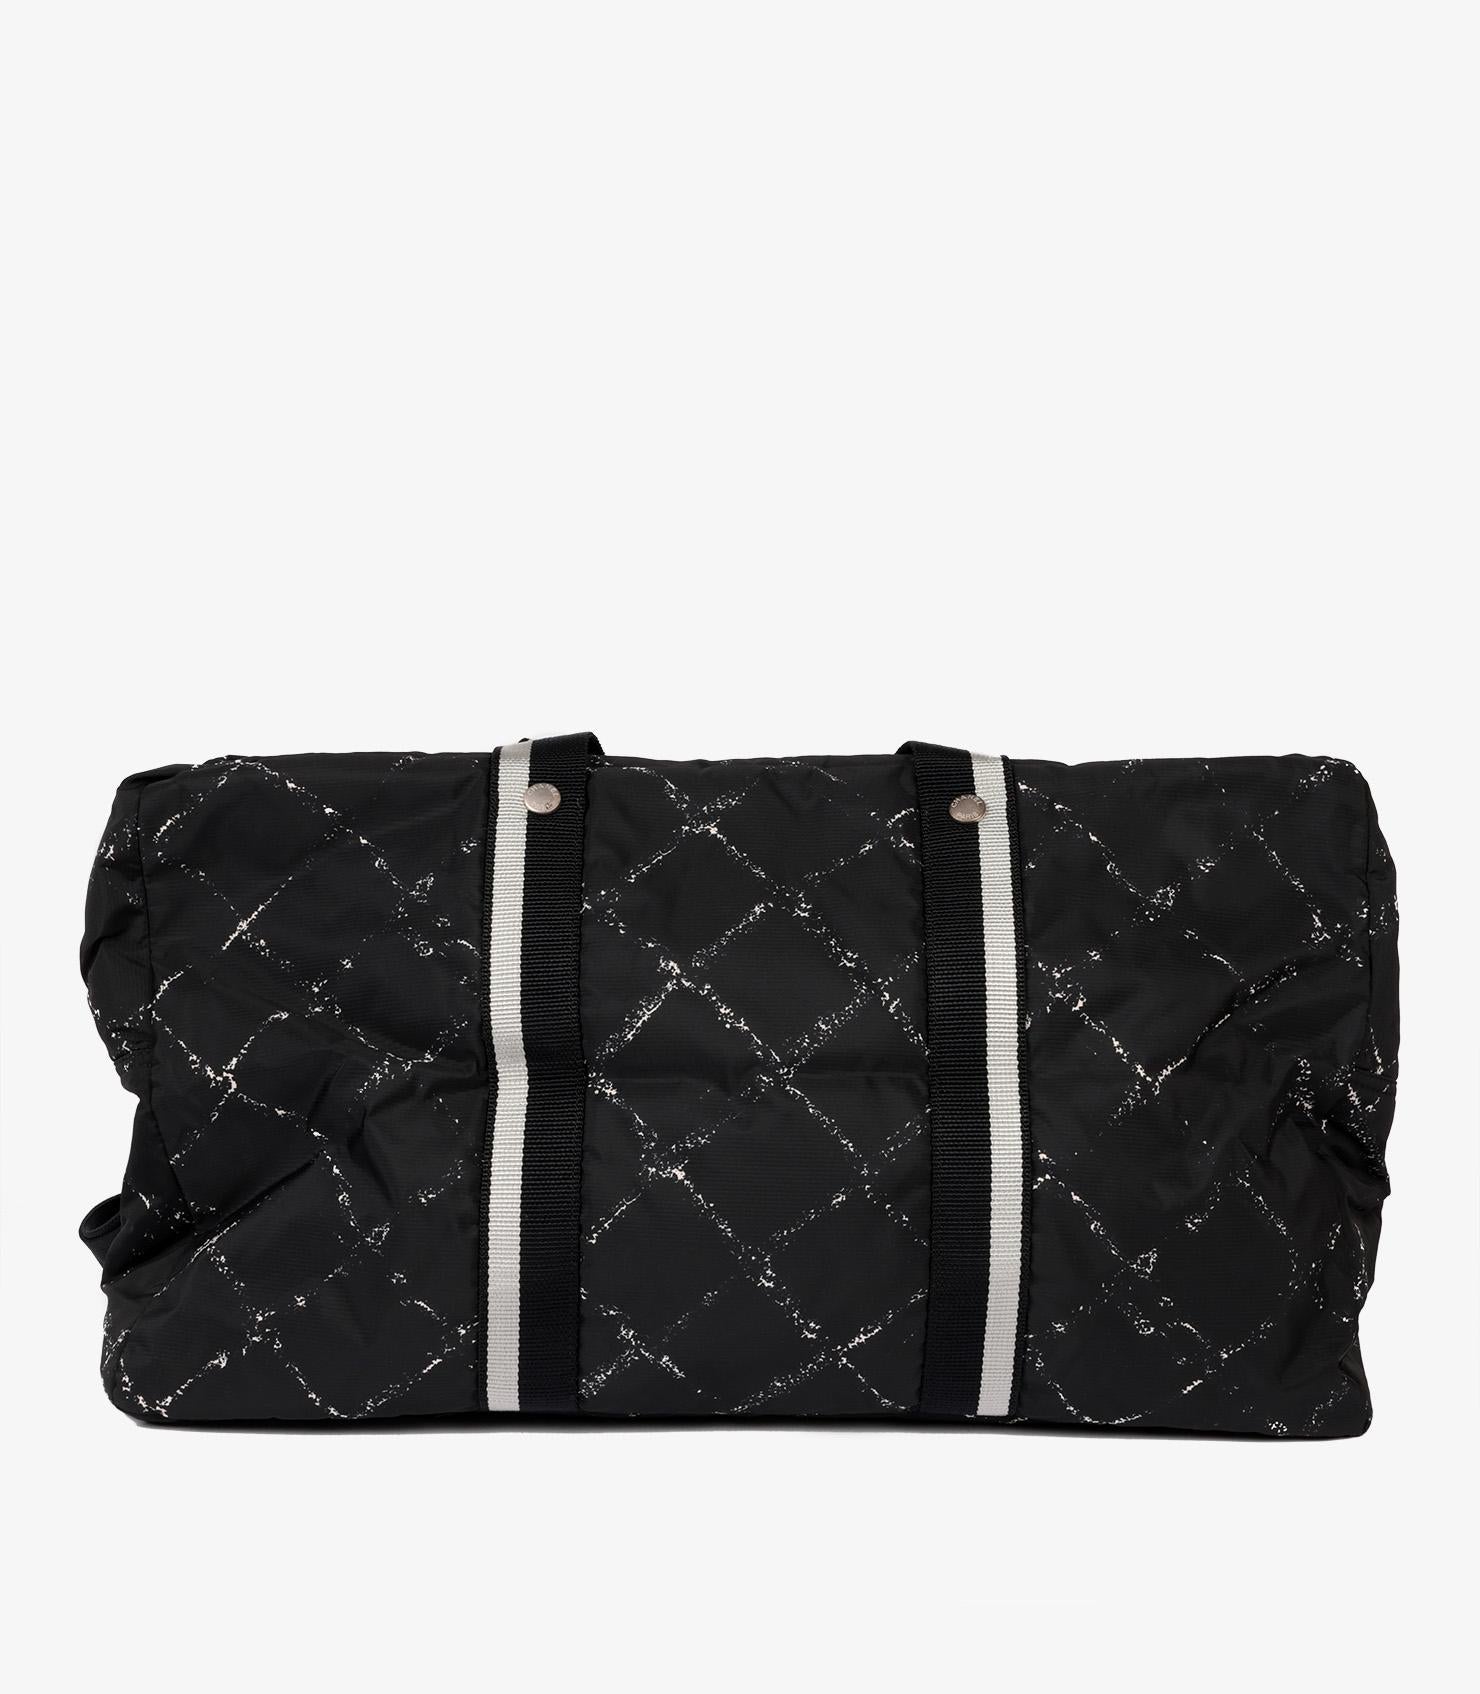 Chanel Black & White Nylon Travel Line Duffle Bag 4